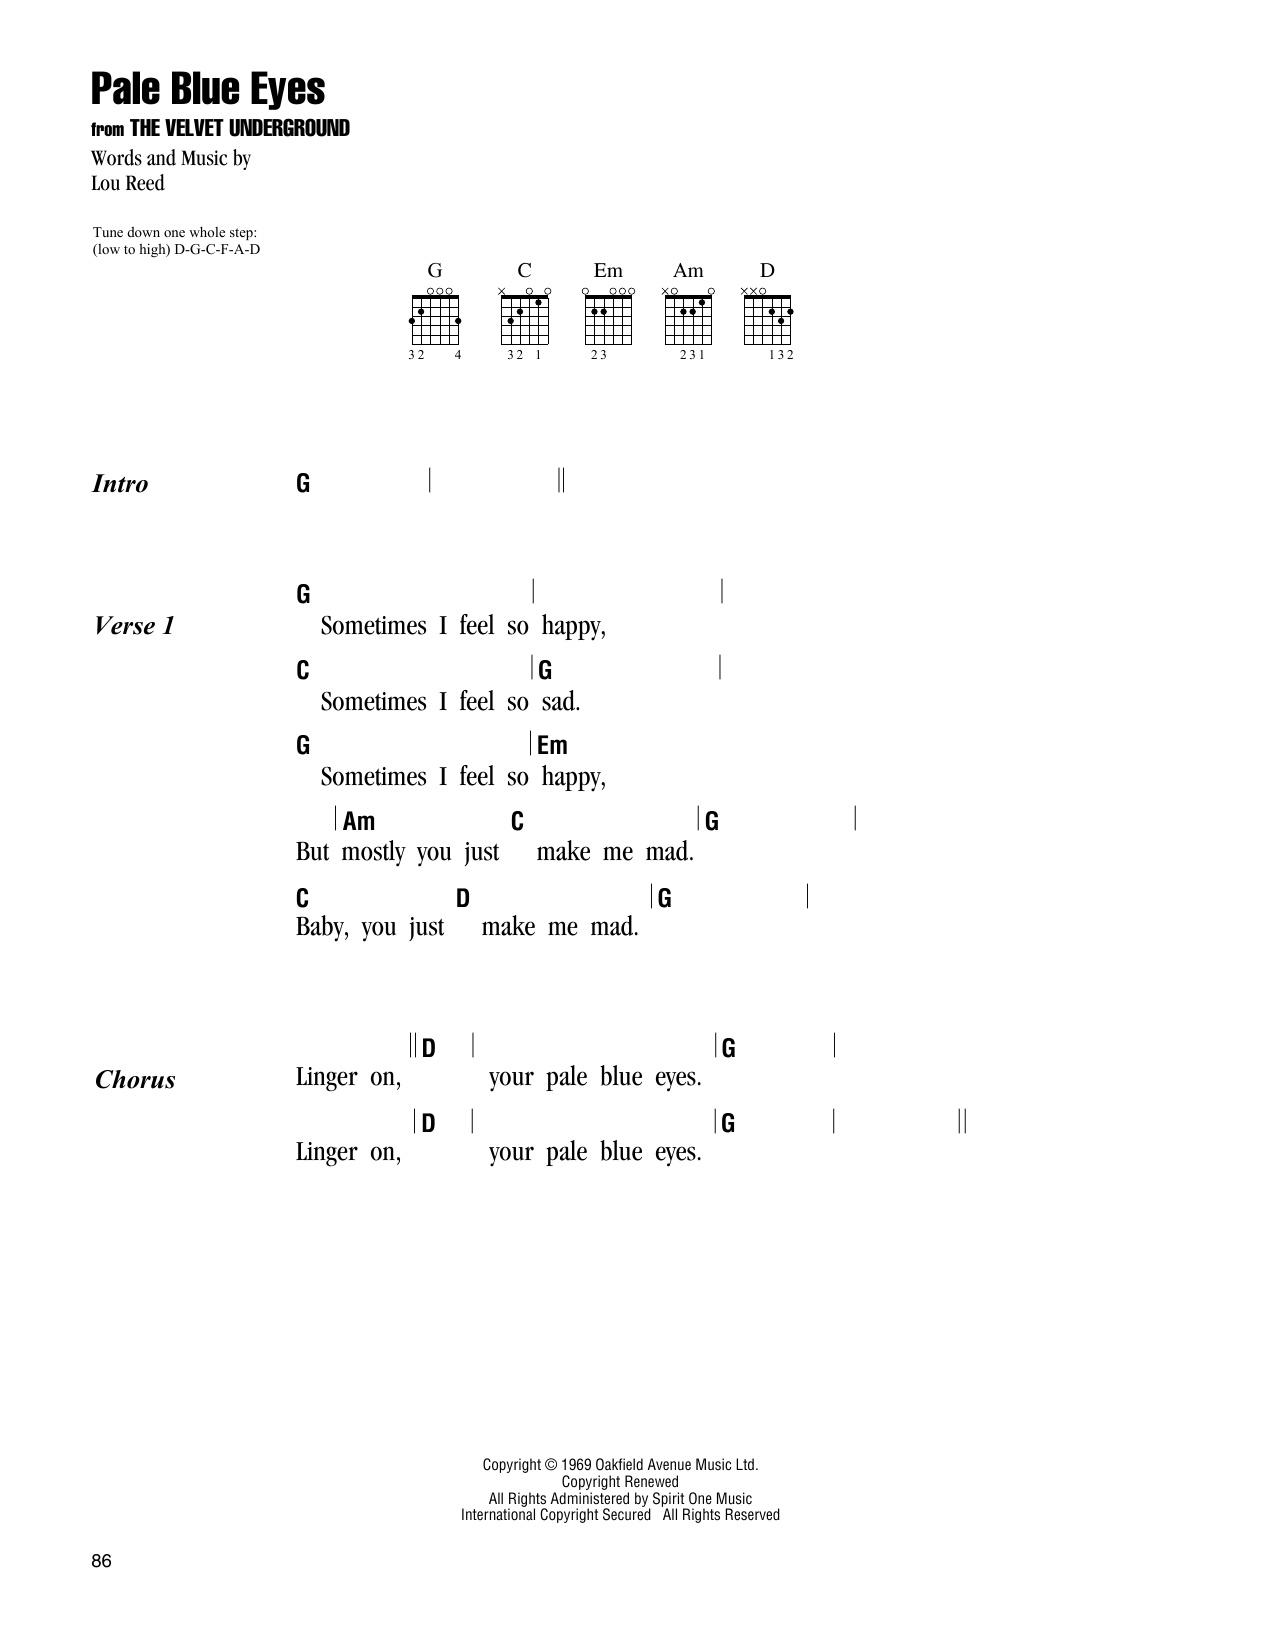 The Velvet Underground Pale Blue Eyes Sheet Music Notes & Chords for Guitar Chords/Lyrics - Download or Print PDF